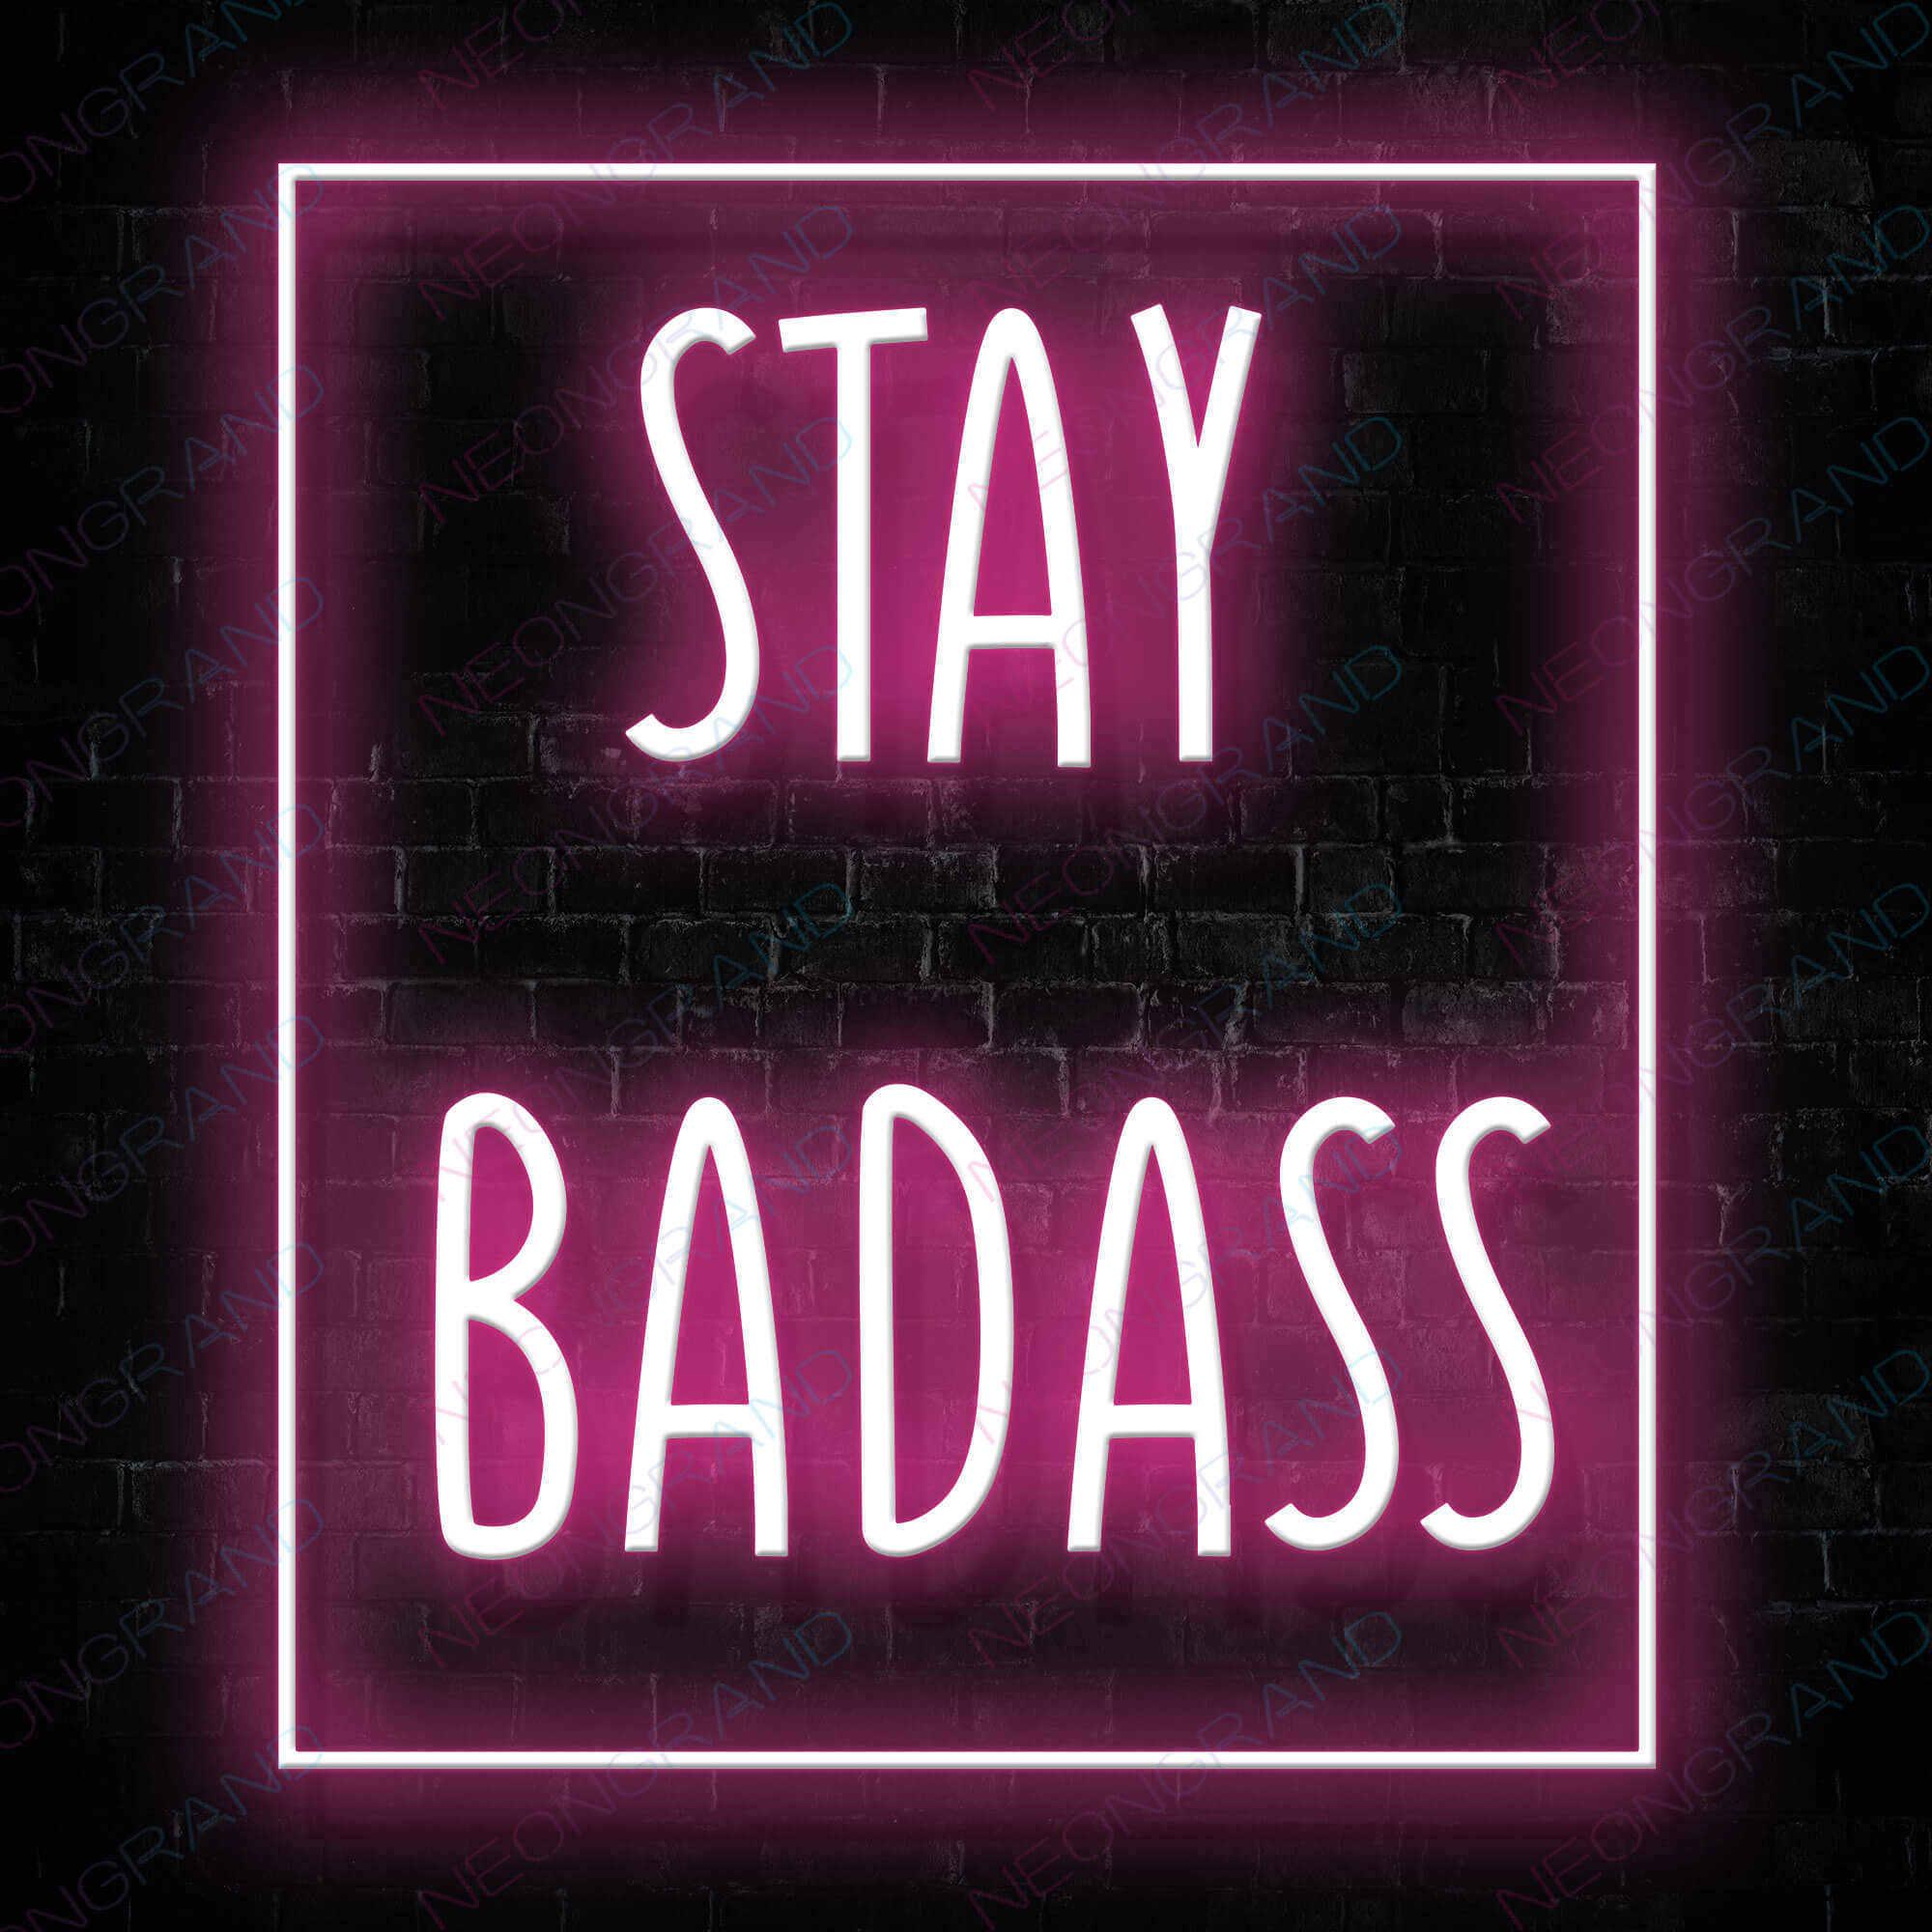 Stay Badass Neon Sign Girls Led Light